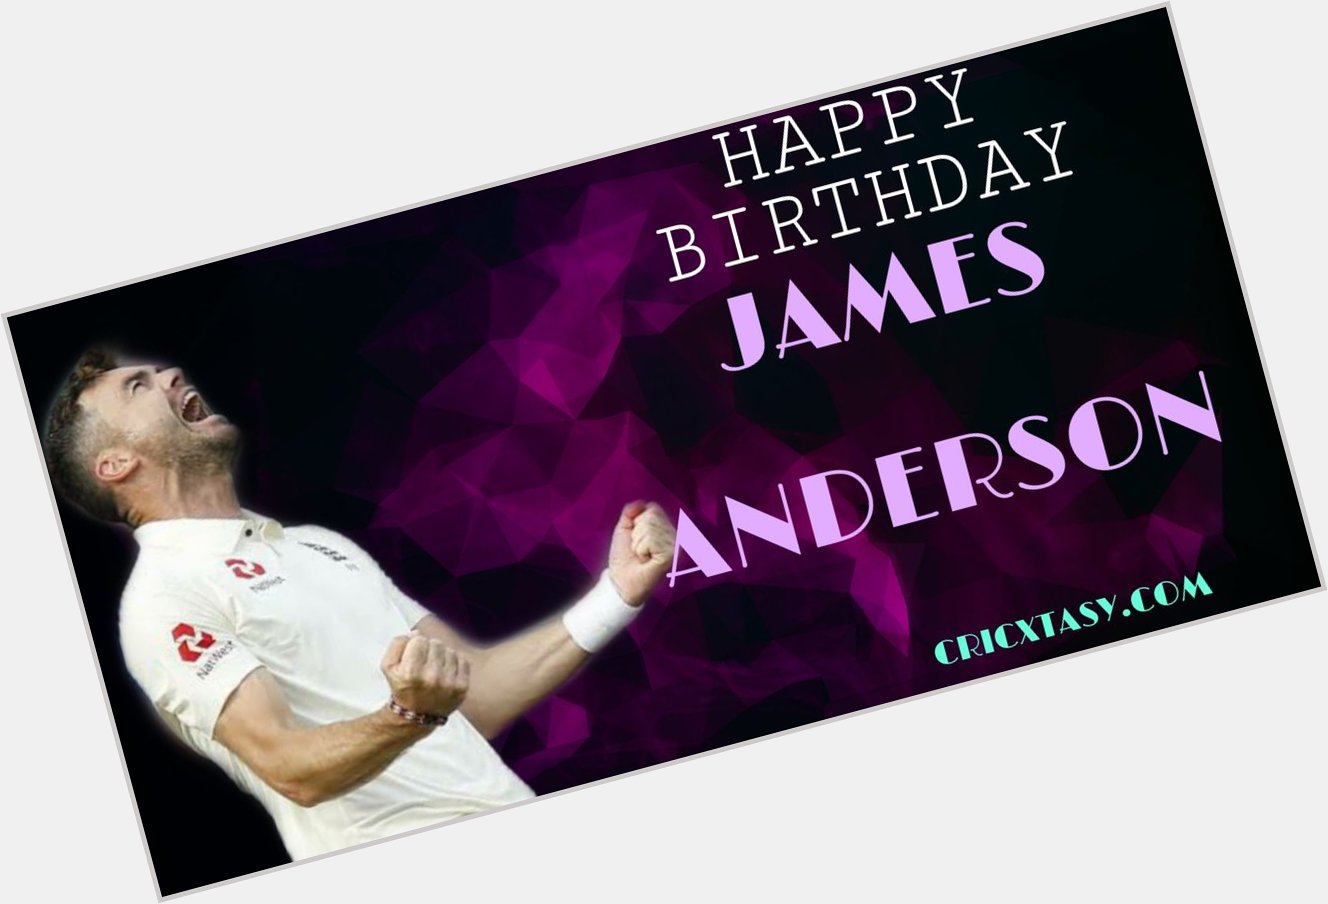 5  8  9  Test wickets
2  6  9  ODI wickets
1  8  T20I wickets

Happy Birthday, James Anderson  